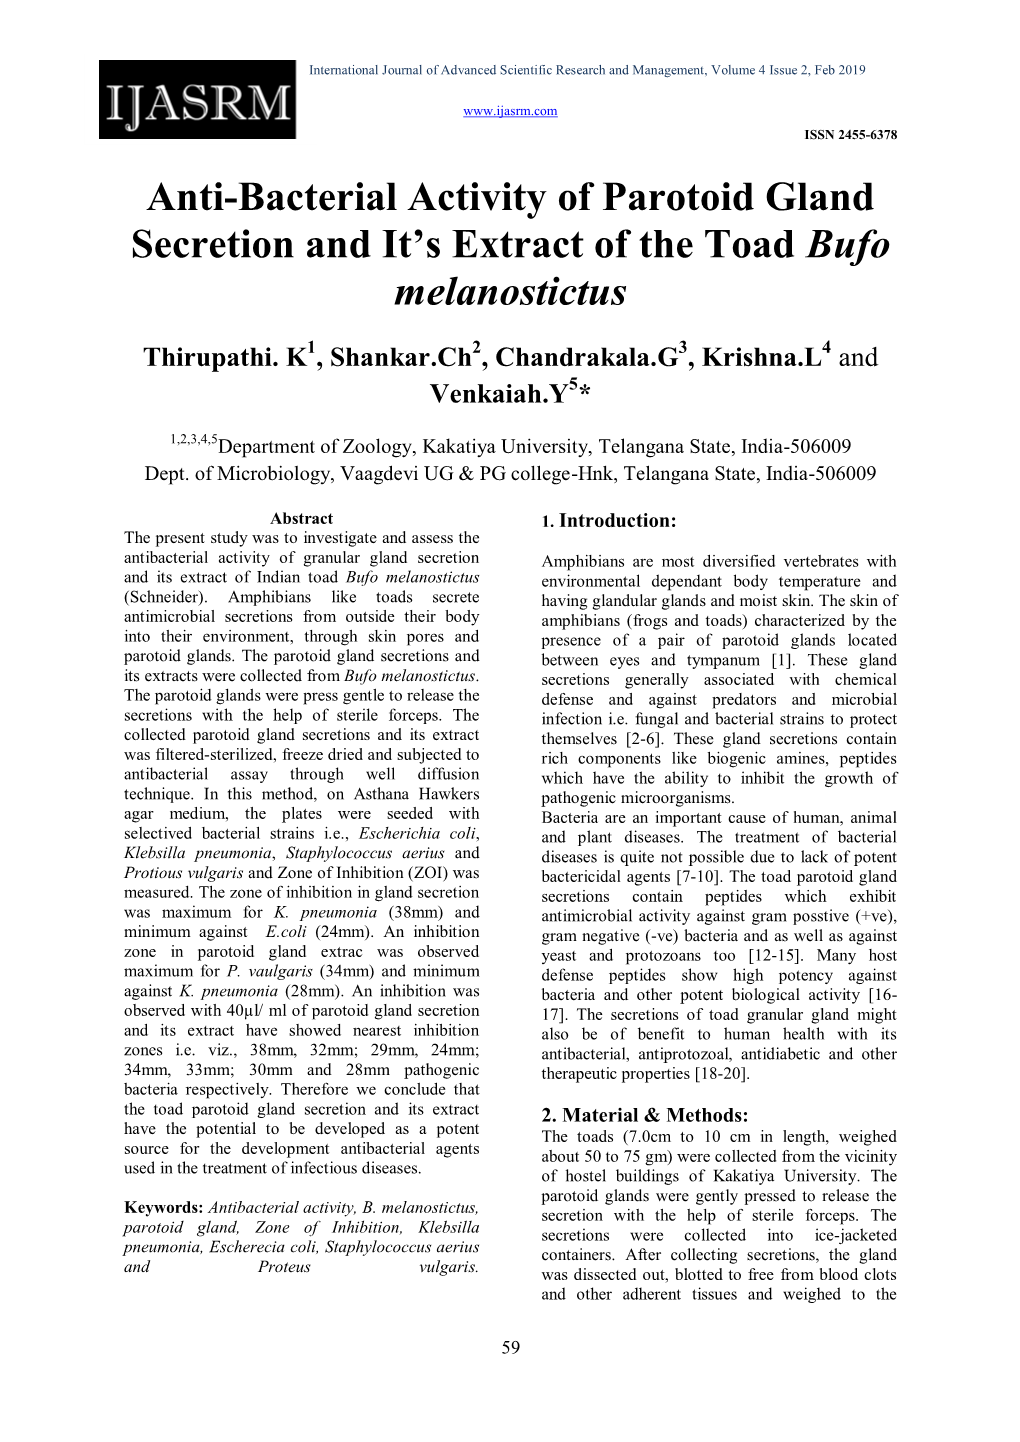 Anti-Bacterial Activity of Parotoid Gland Secretion and It's